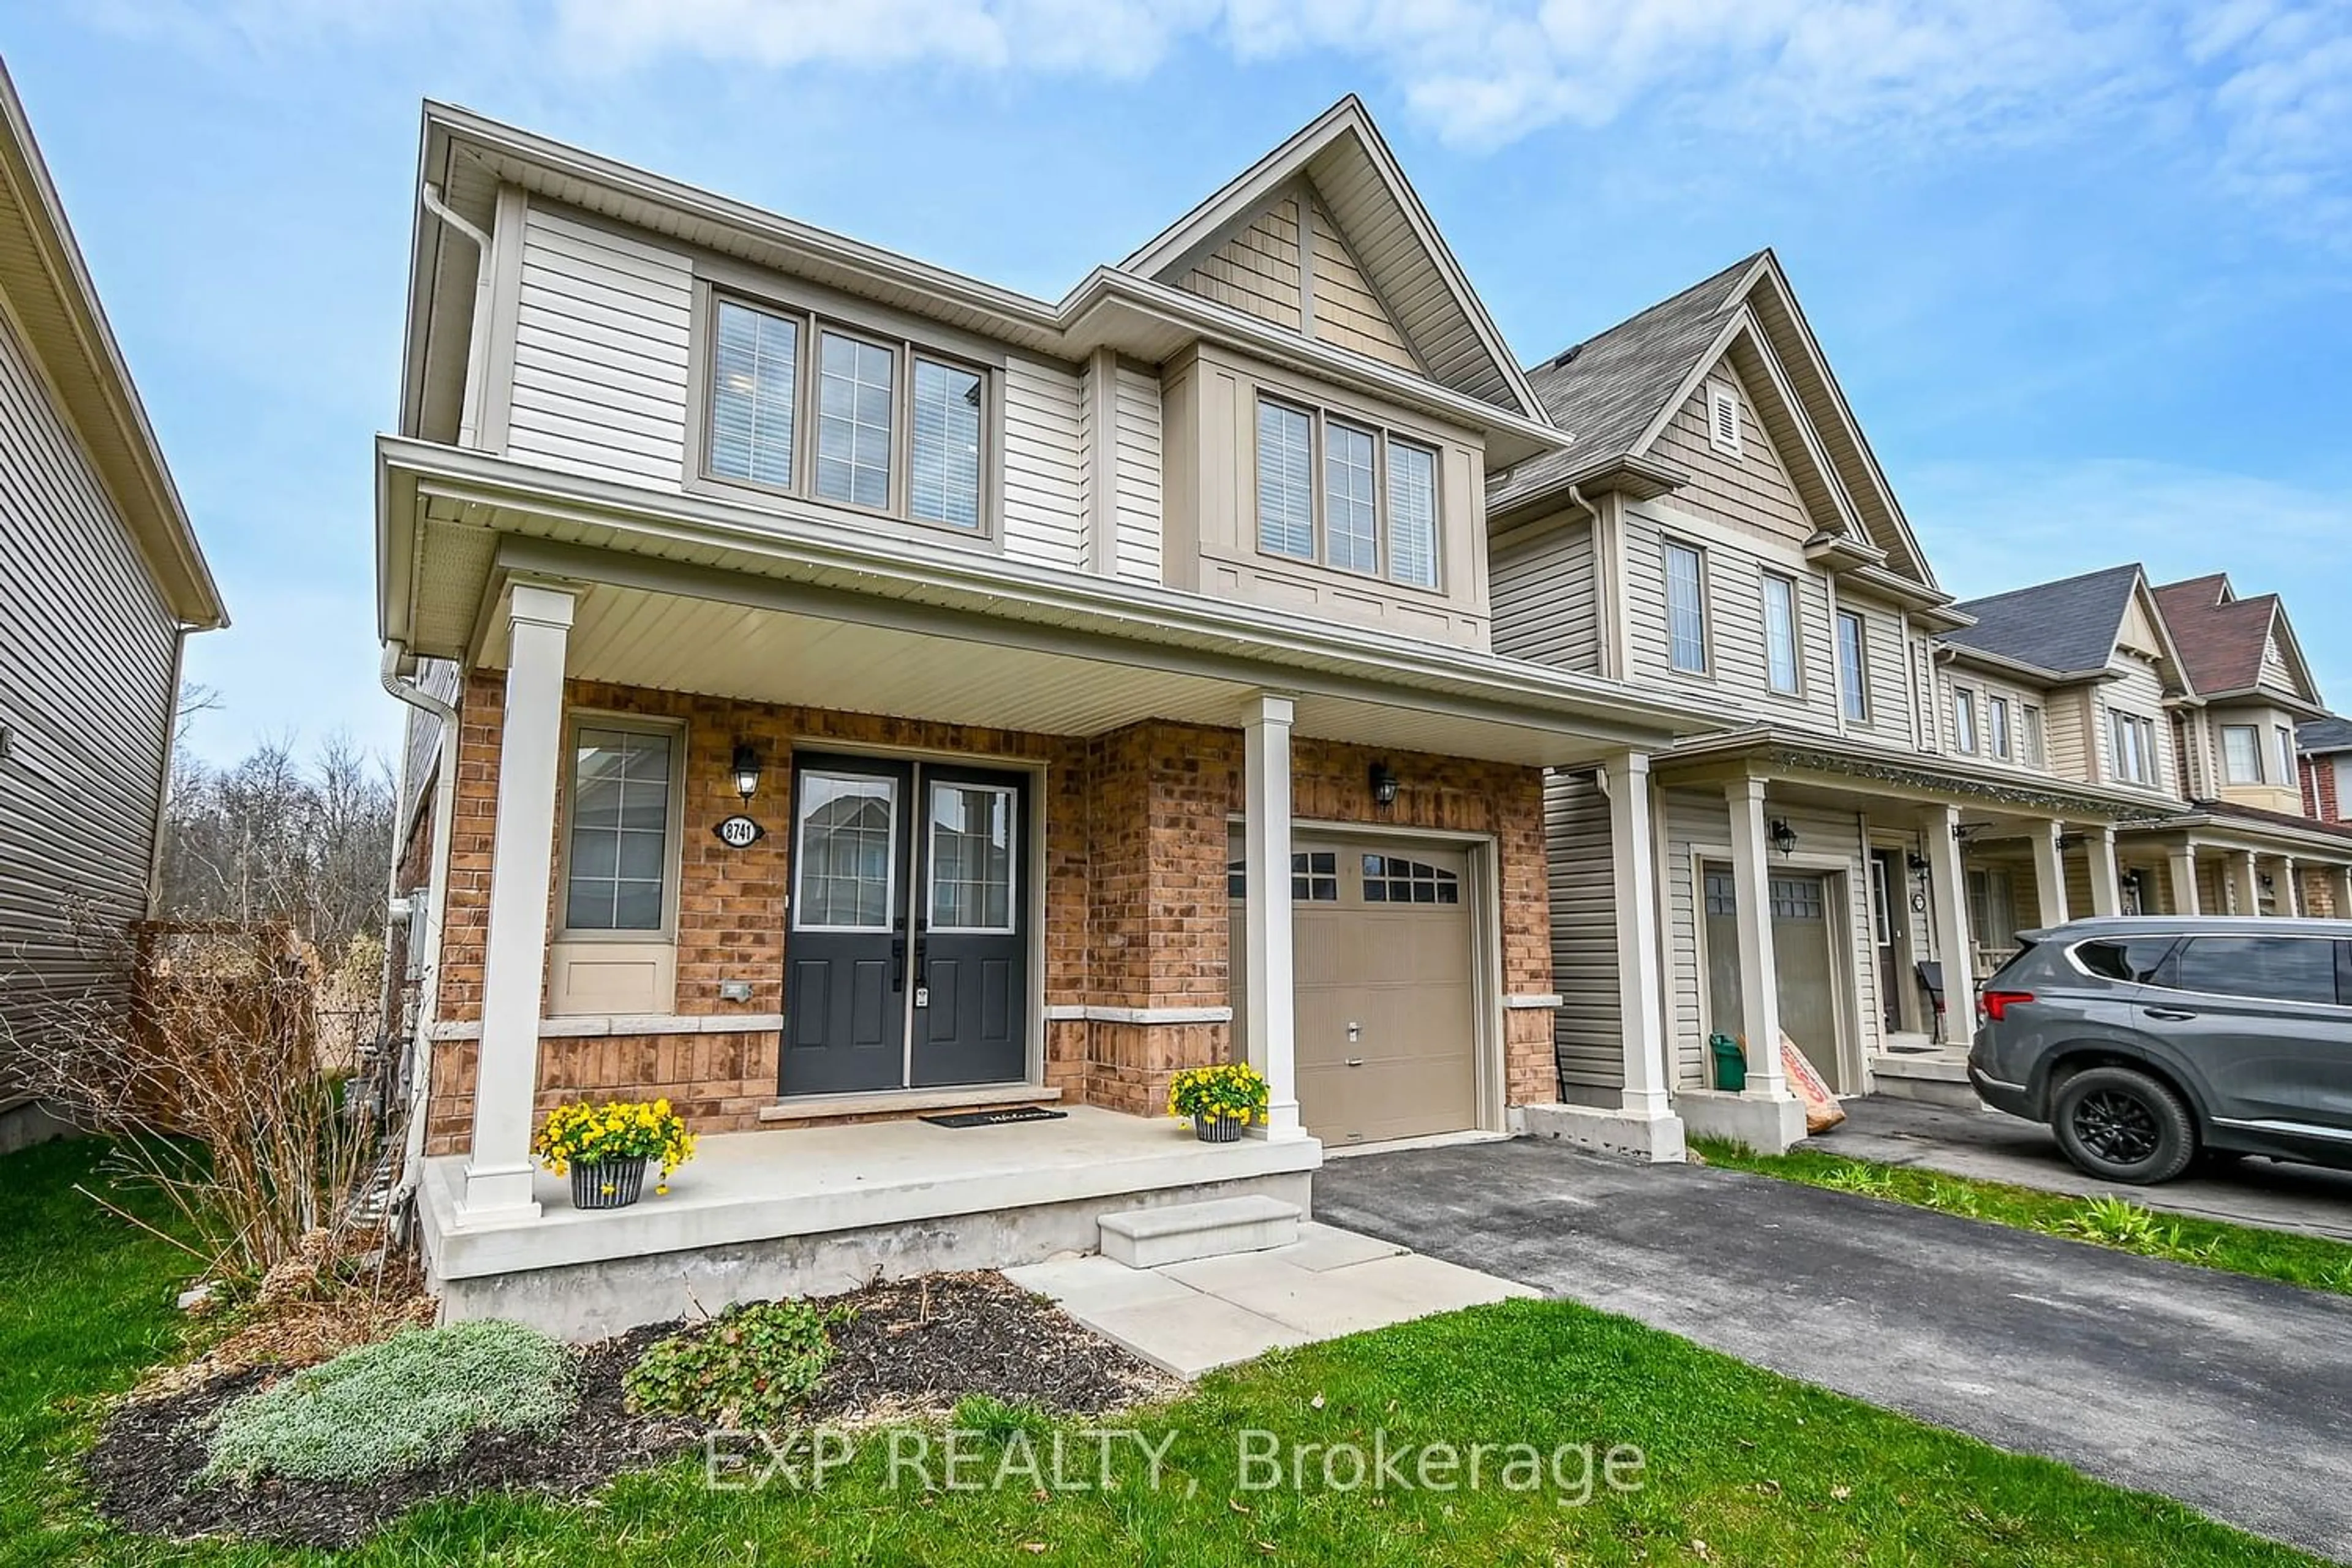 Home with brick exterior material for 8741 Dogwood Cres, Niagara Falls Ontario L2H 0K9